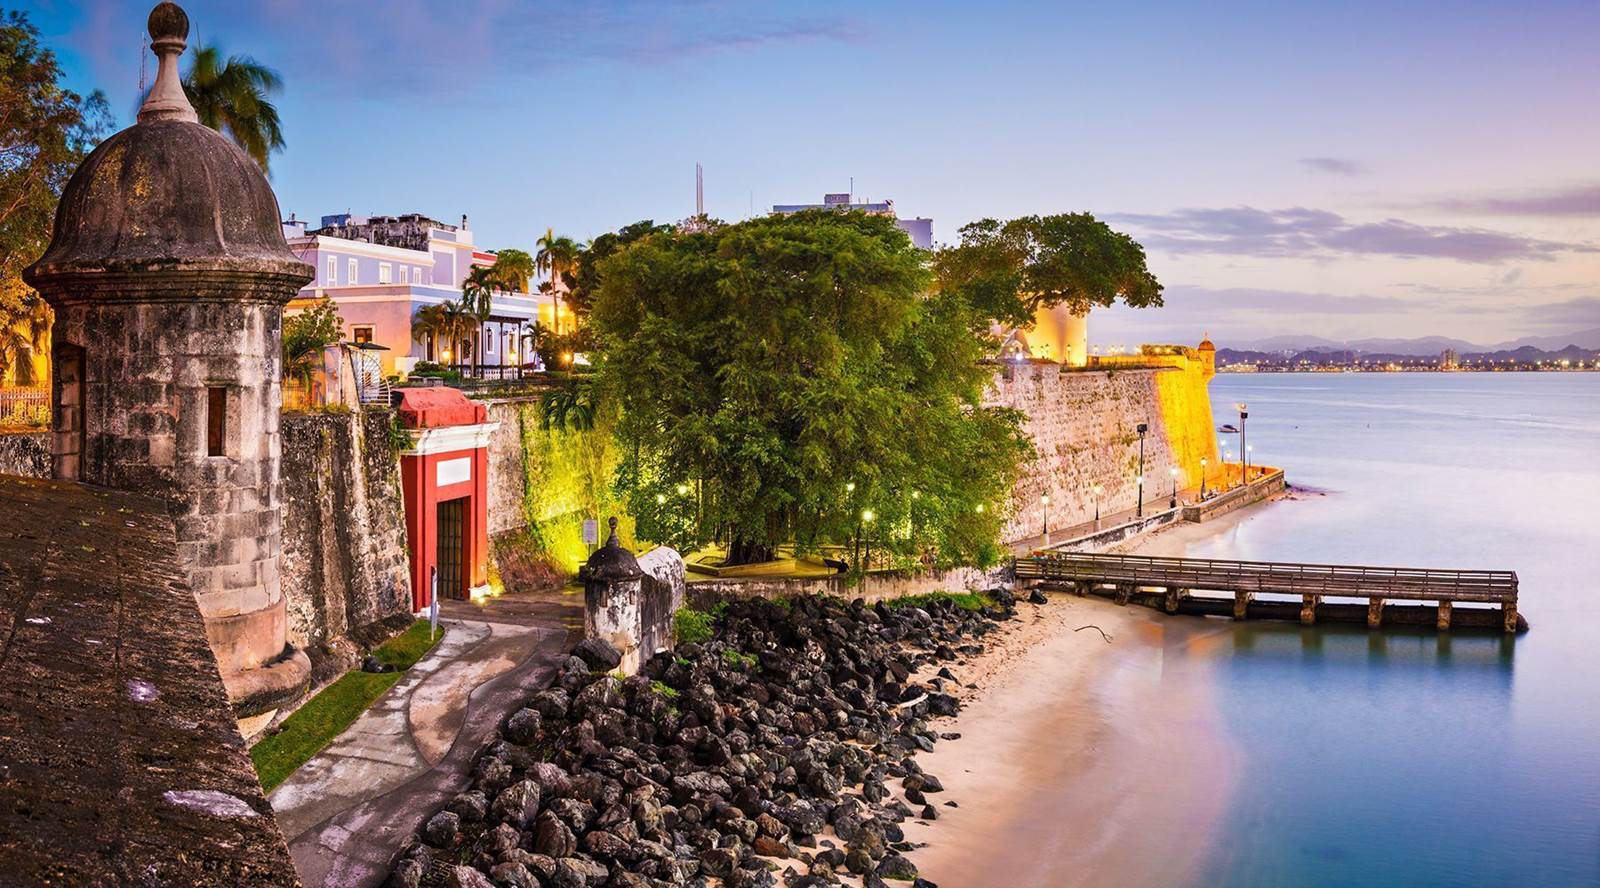 9. San Juan, Puerto Rico